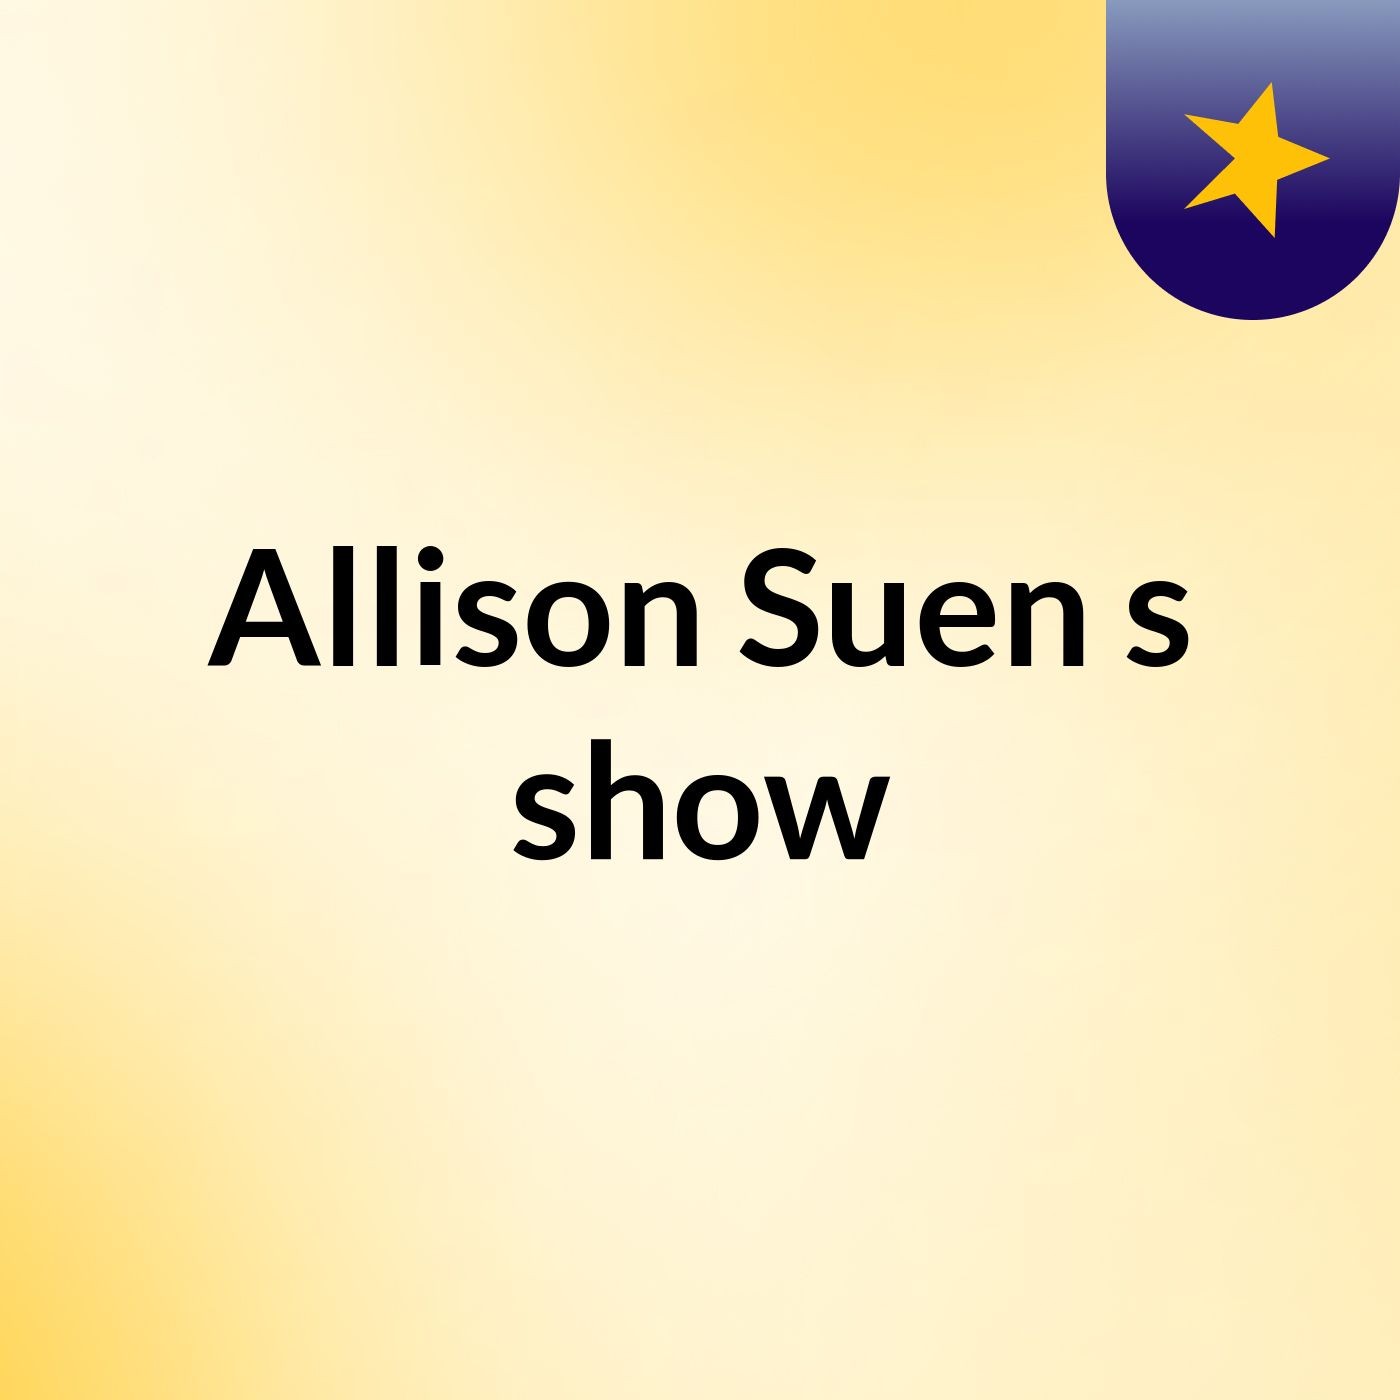 Allison Suen's show